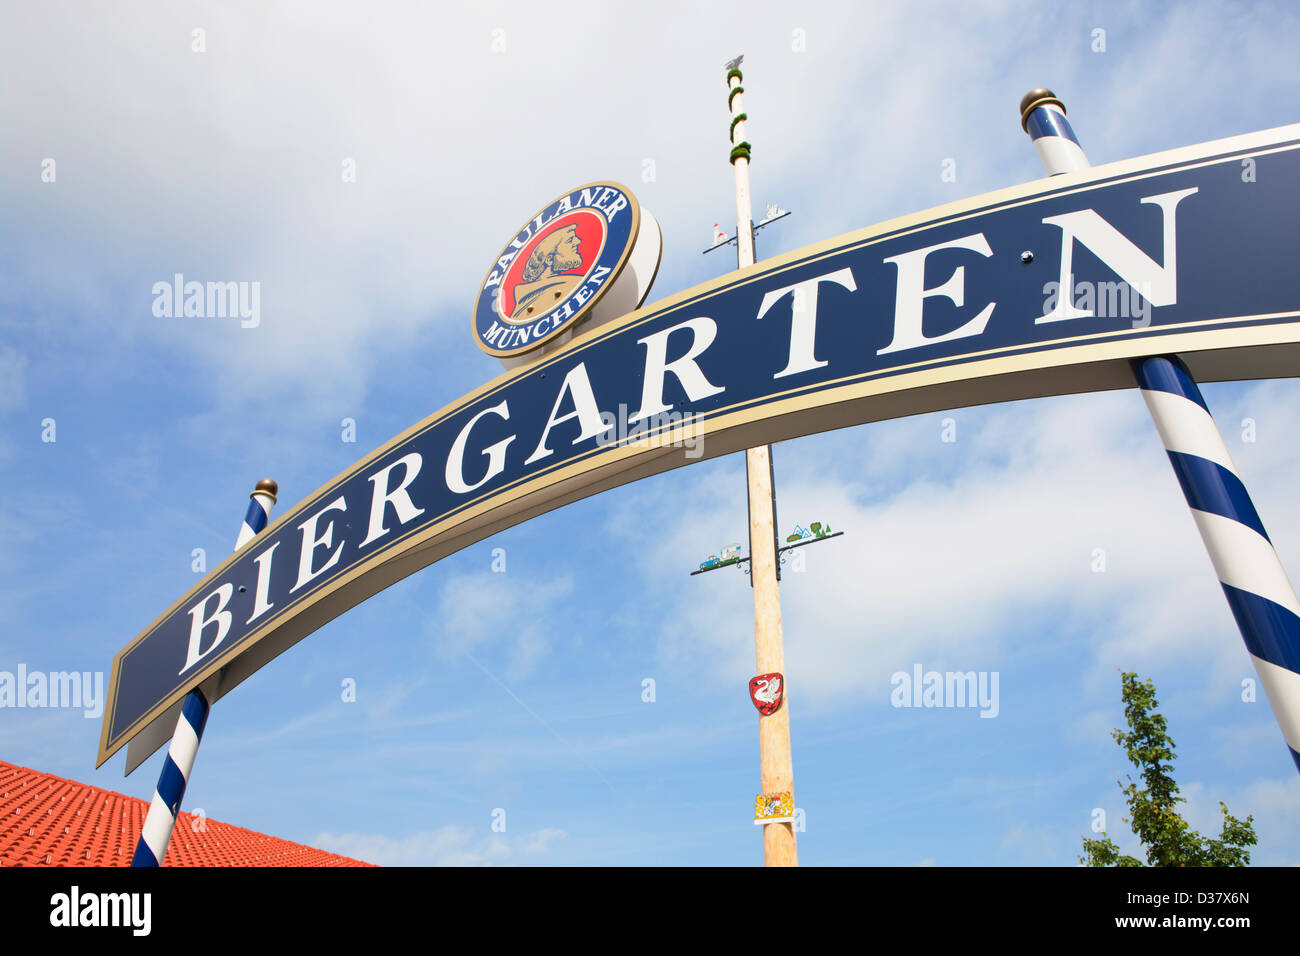 Biergarten sign, Bavaria, Germany Stock Photo